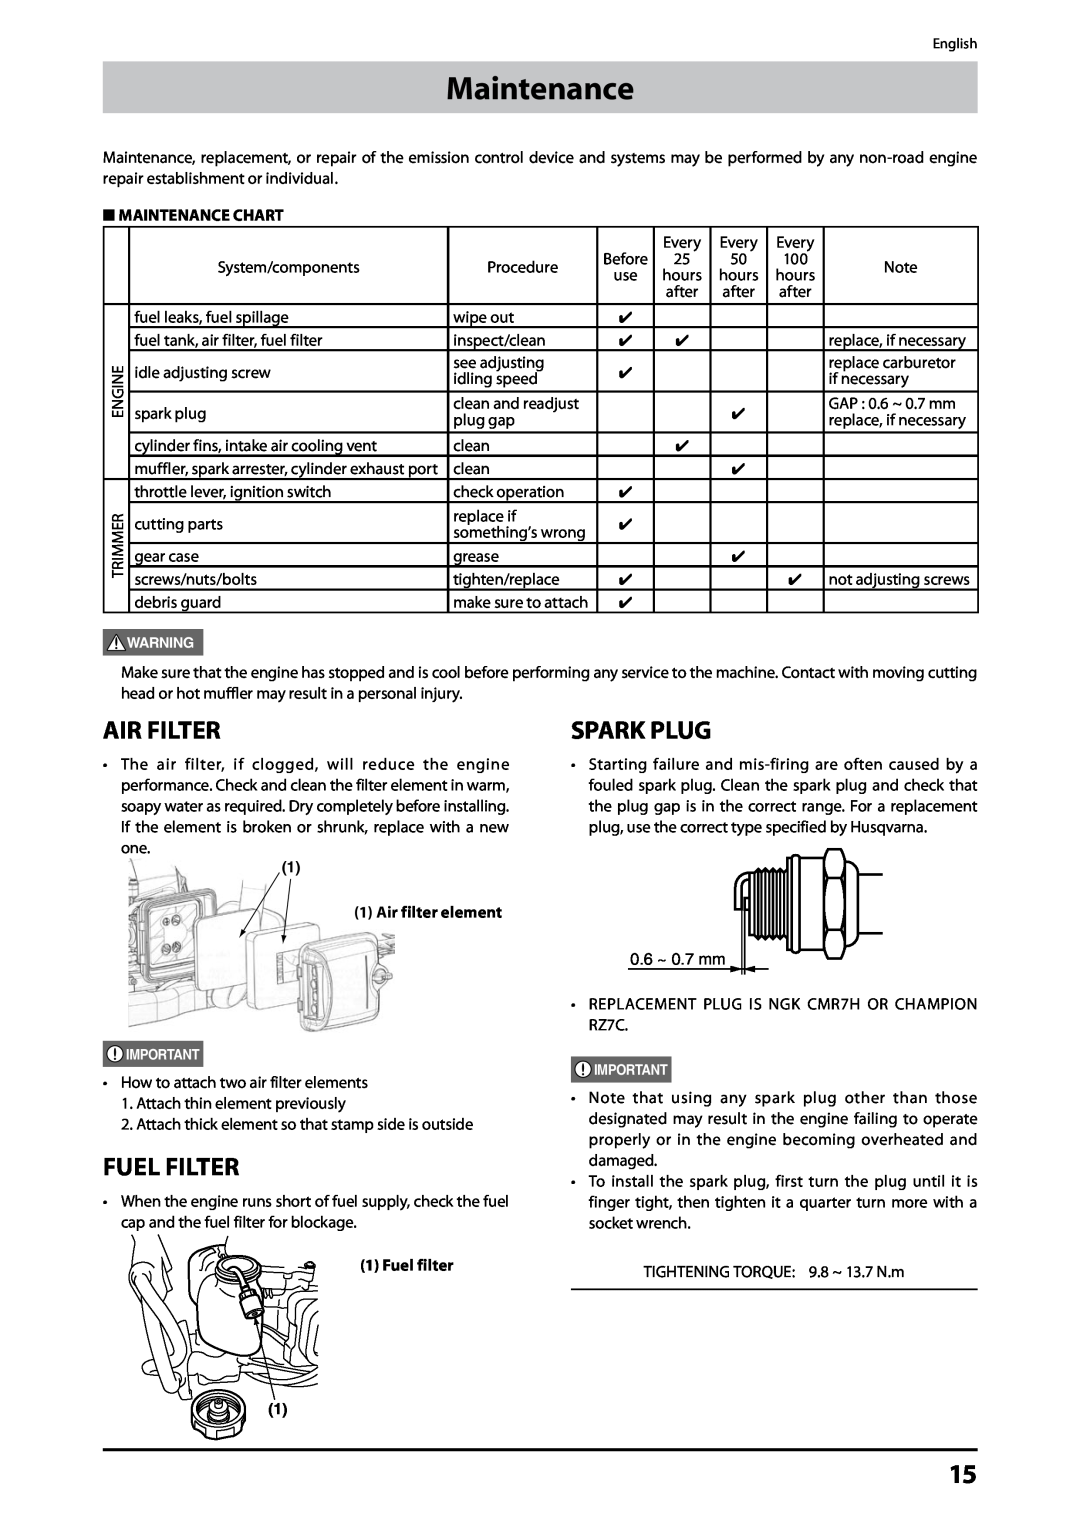 Husqvarna 226HD60S, 226HD75S Air Filter, Fuel Filter, Spark Plug, Maintenance Chart, Fuel filter, Air filter element 